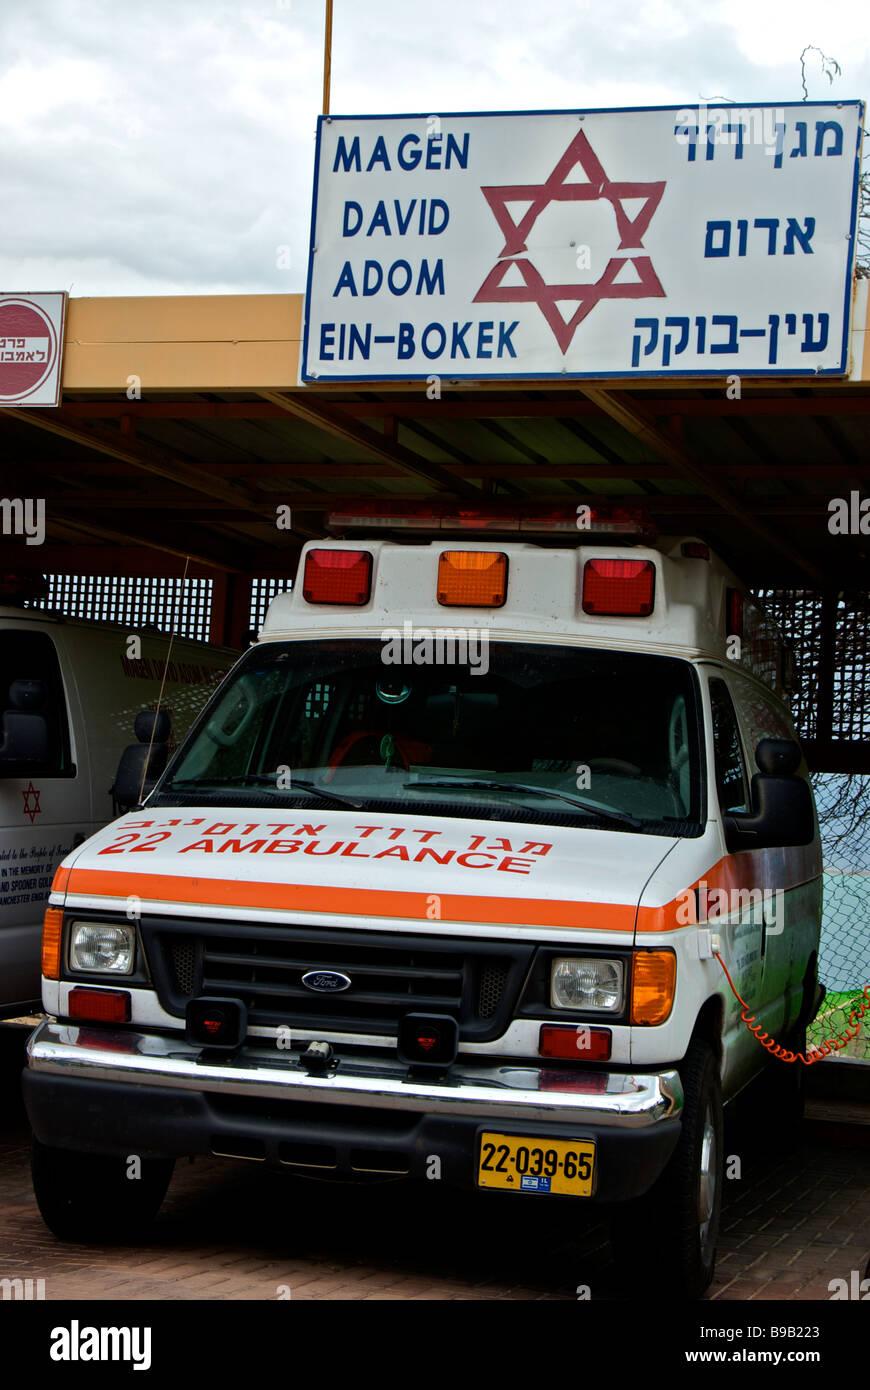 Magen David ambulance in resort town of Ein Bokek on Dead Sea Stock Photo